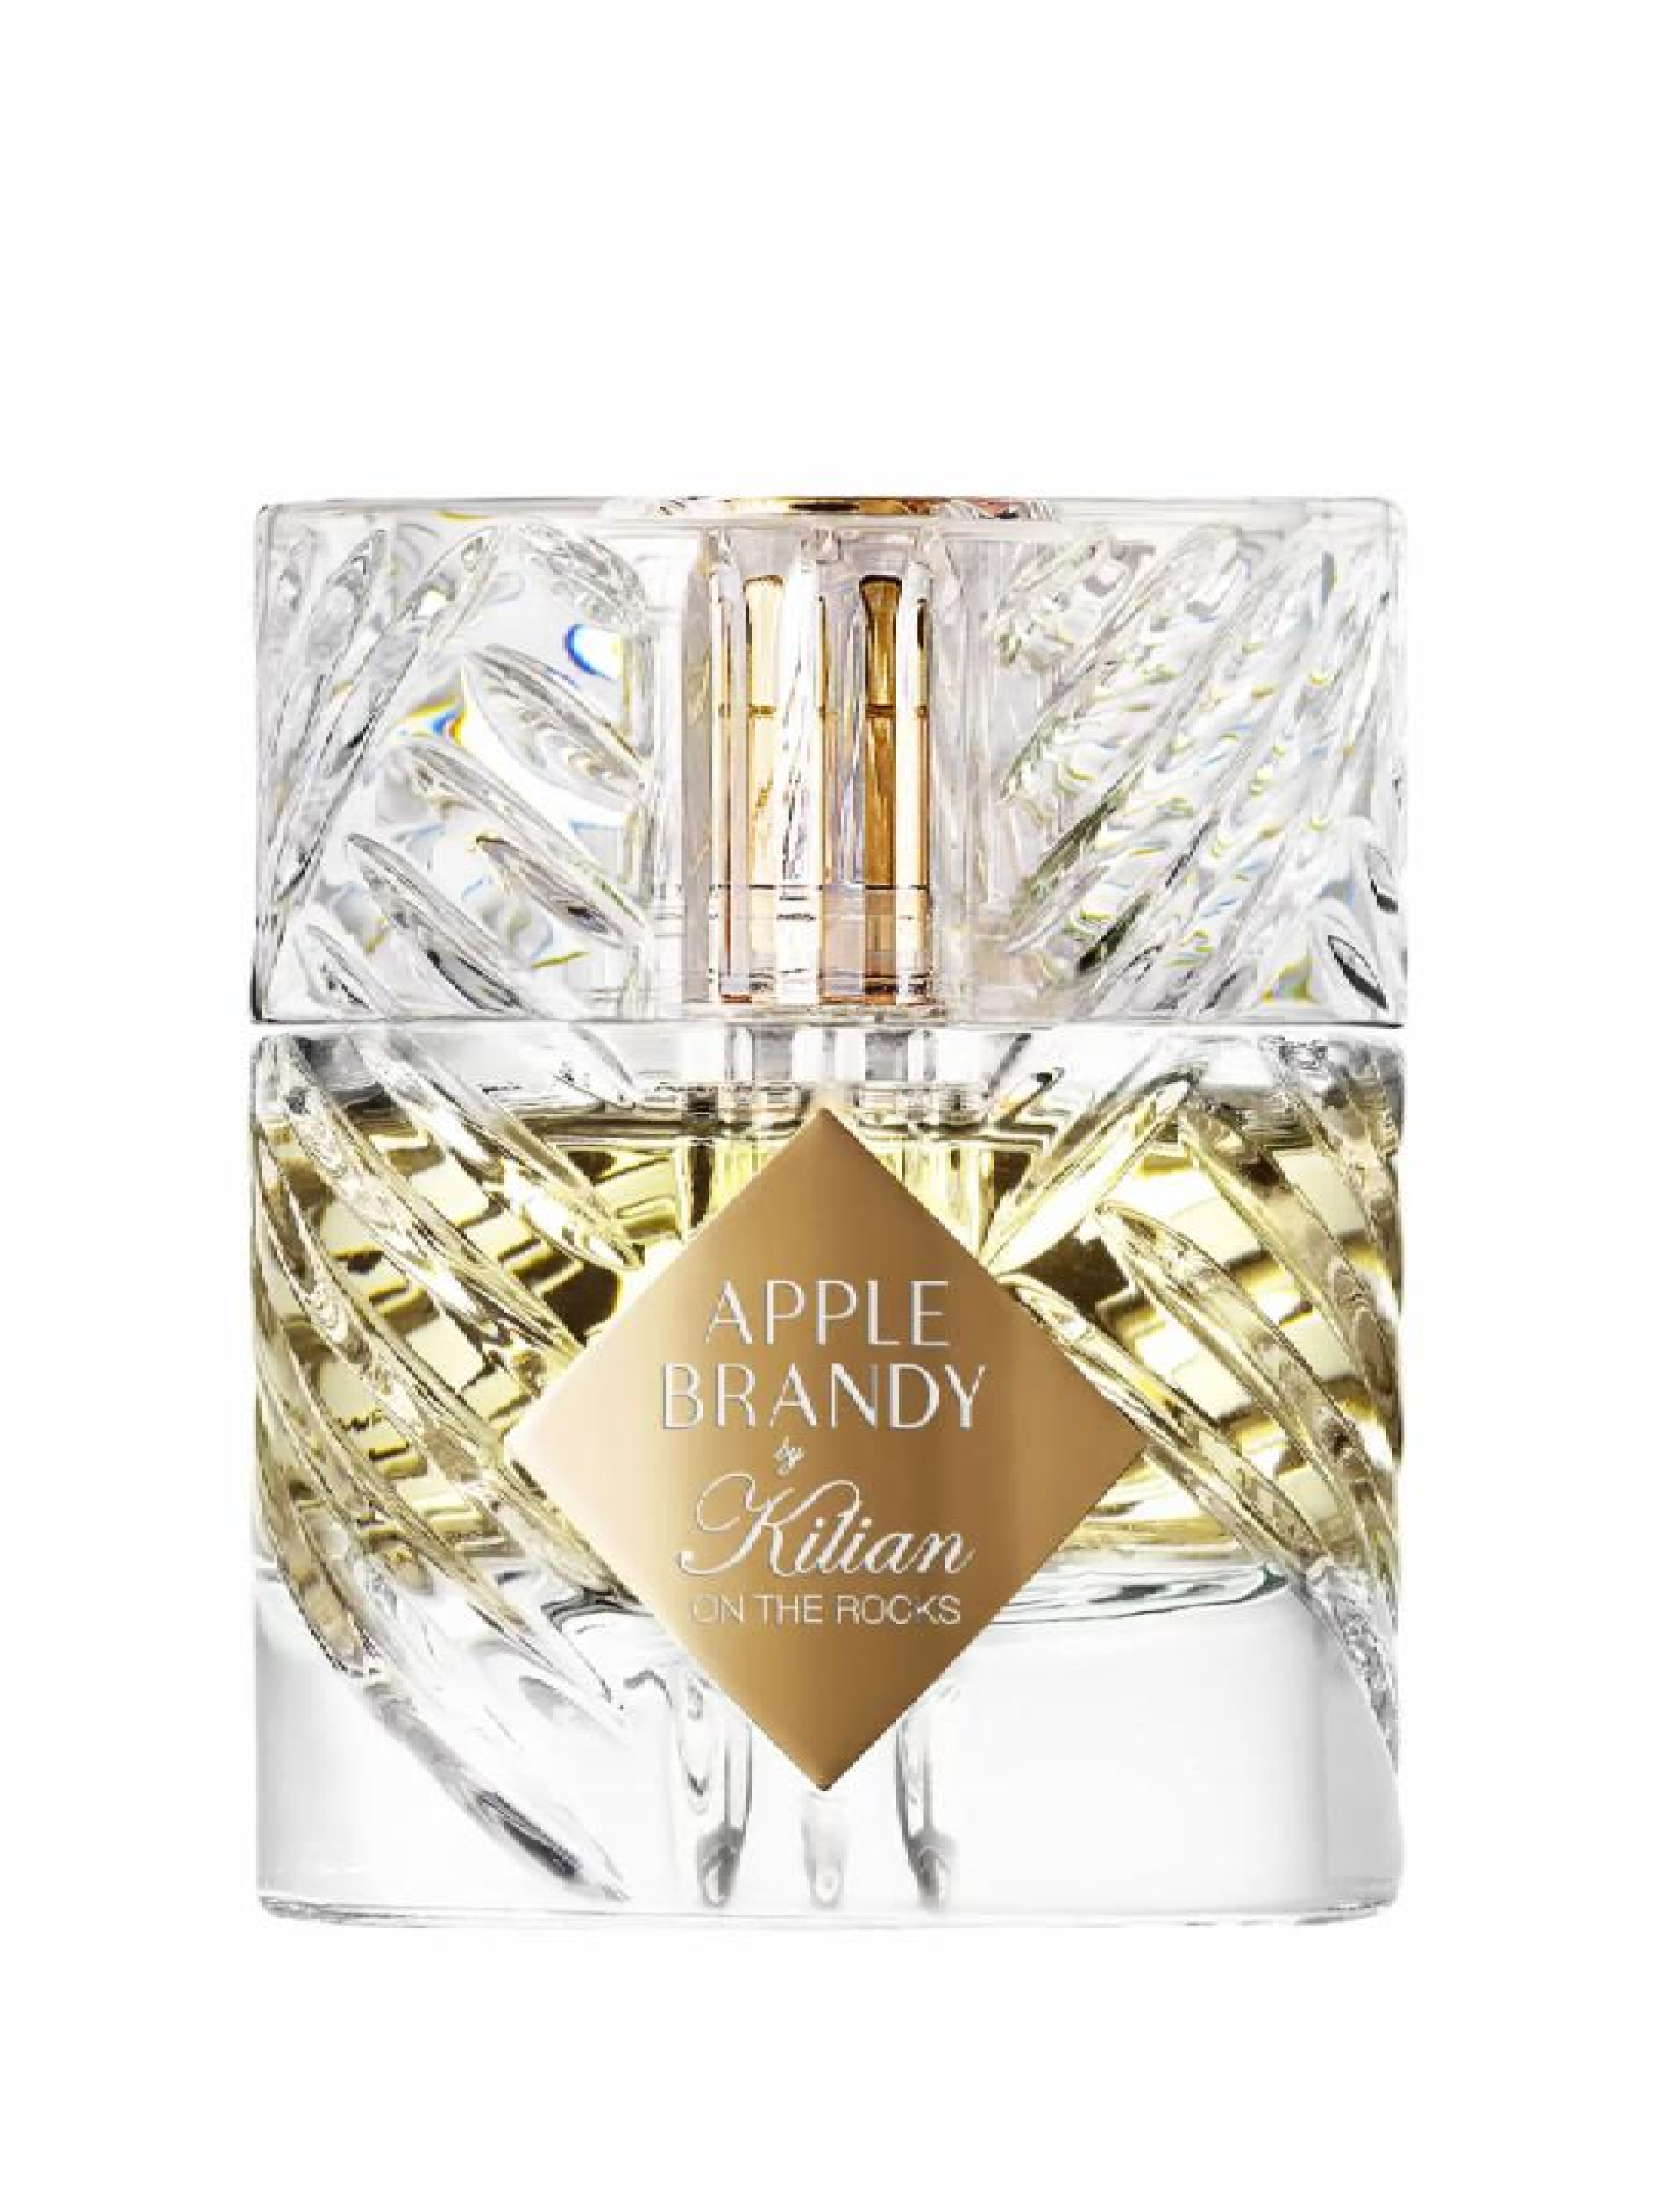 Ангел шер килиан. Kilian Angel's share Eau de Parfum 100 мл. Духи Kilian Apple Brandy. Kilian - Apple Brandy on the Rocks 50 ml. Kilian Roses on Ice EDP 50ml.